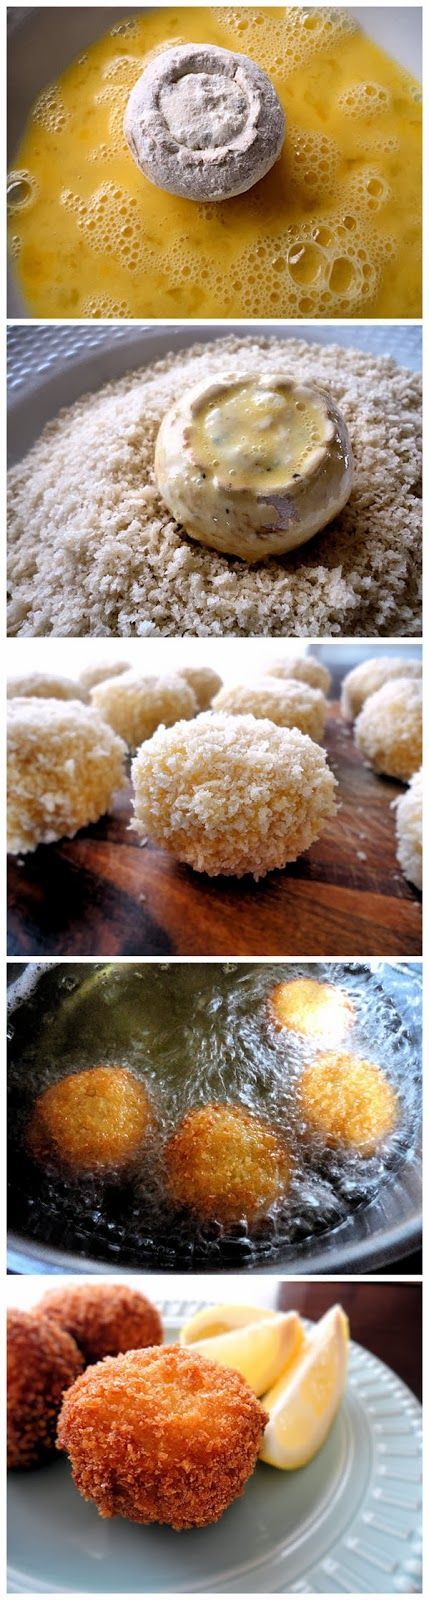 joysama images: Fried Stuffed Mushrooms Recipe